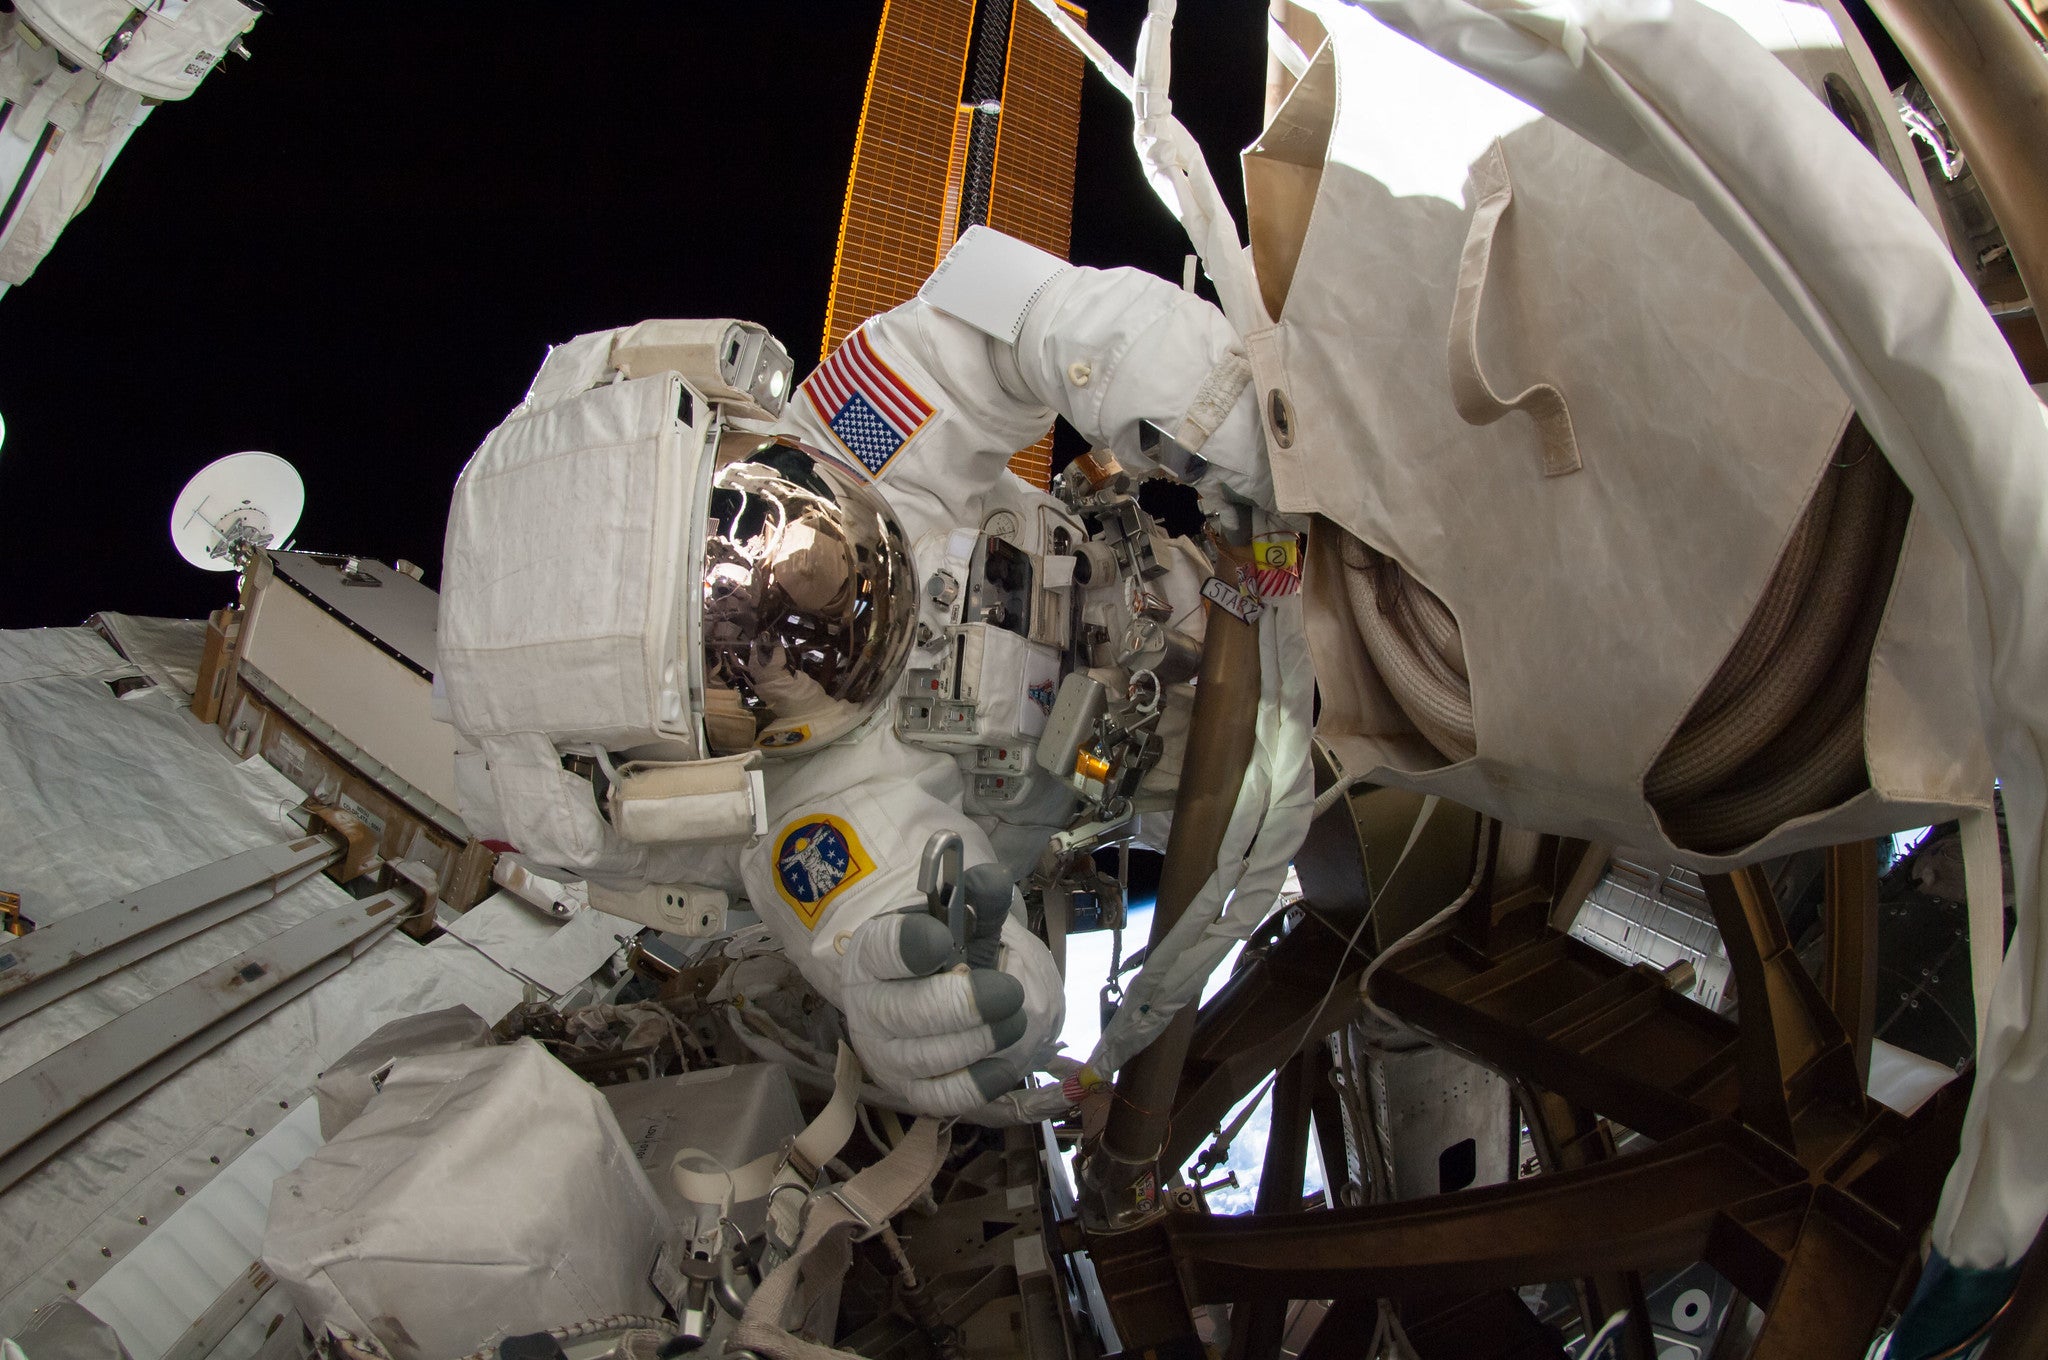 Wiseman during a spacewalk on October 7, 2014. (Photo: NASA)